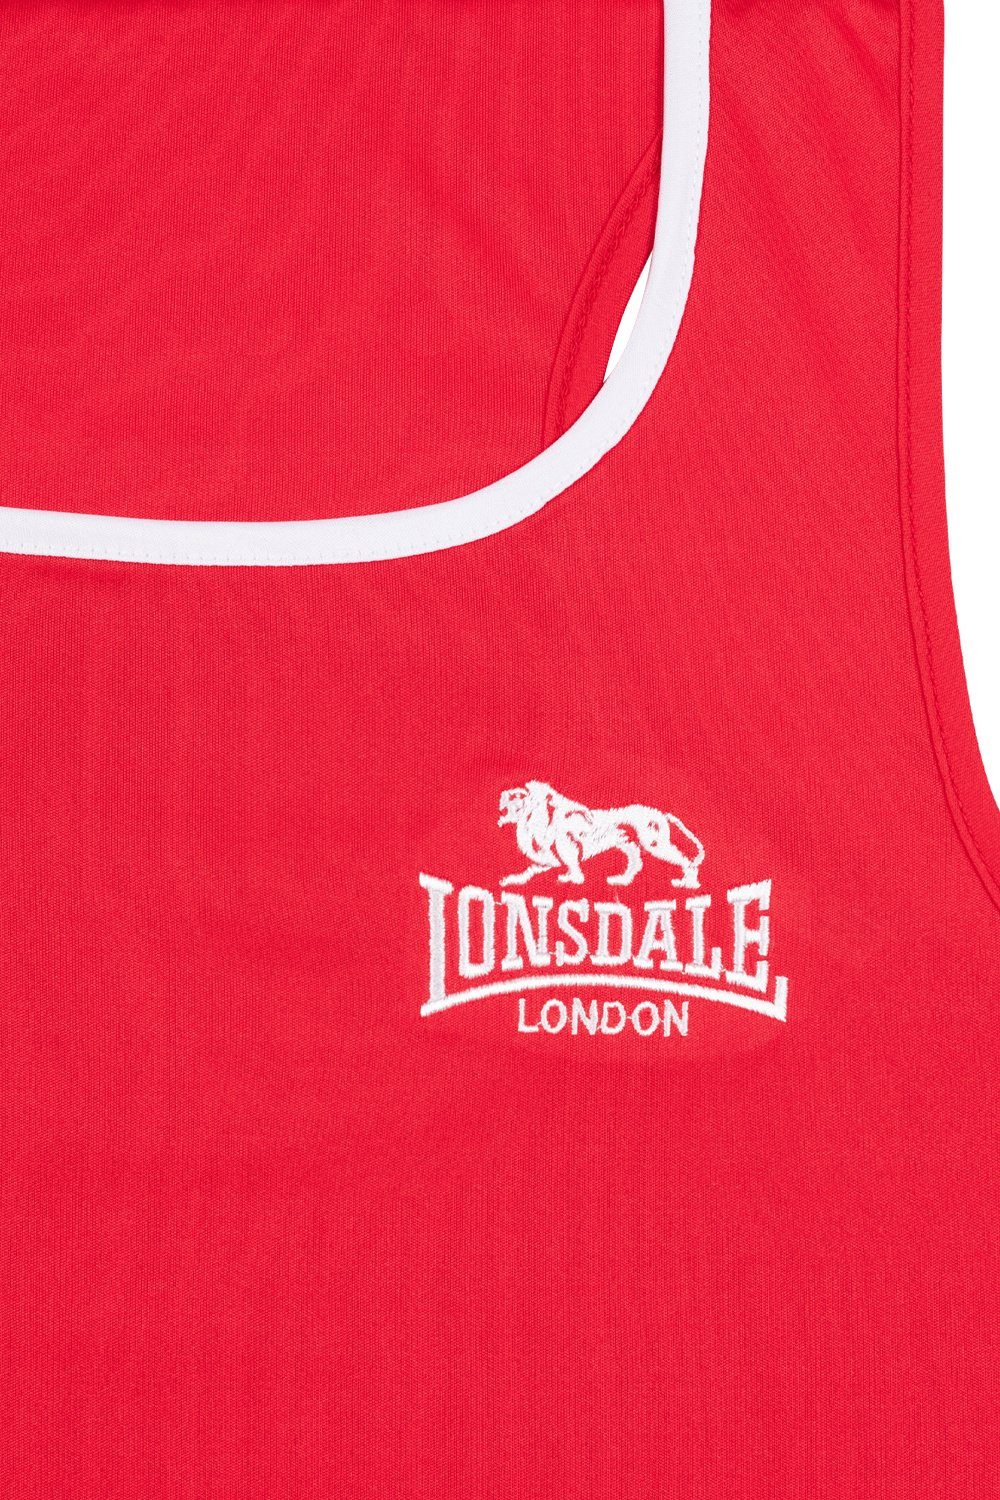 Sporttop Lonsdale Lonsdale Singlet Erwachsene Amateur red T-Shirt Herren